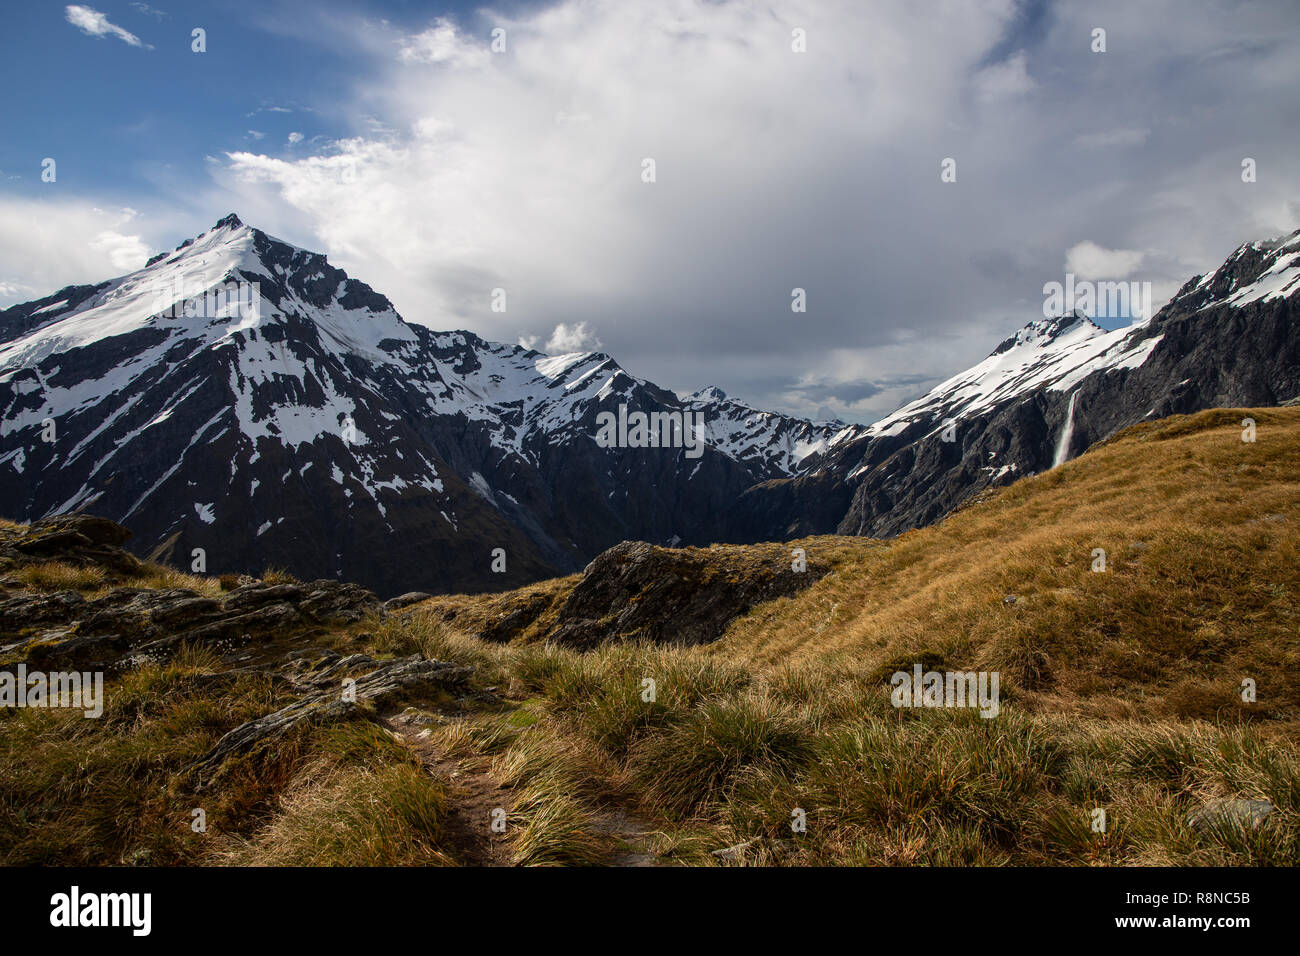 Le montagne con valanga, Nuova Zelanda Foto Stock